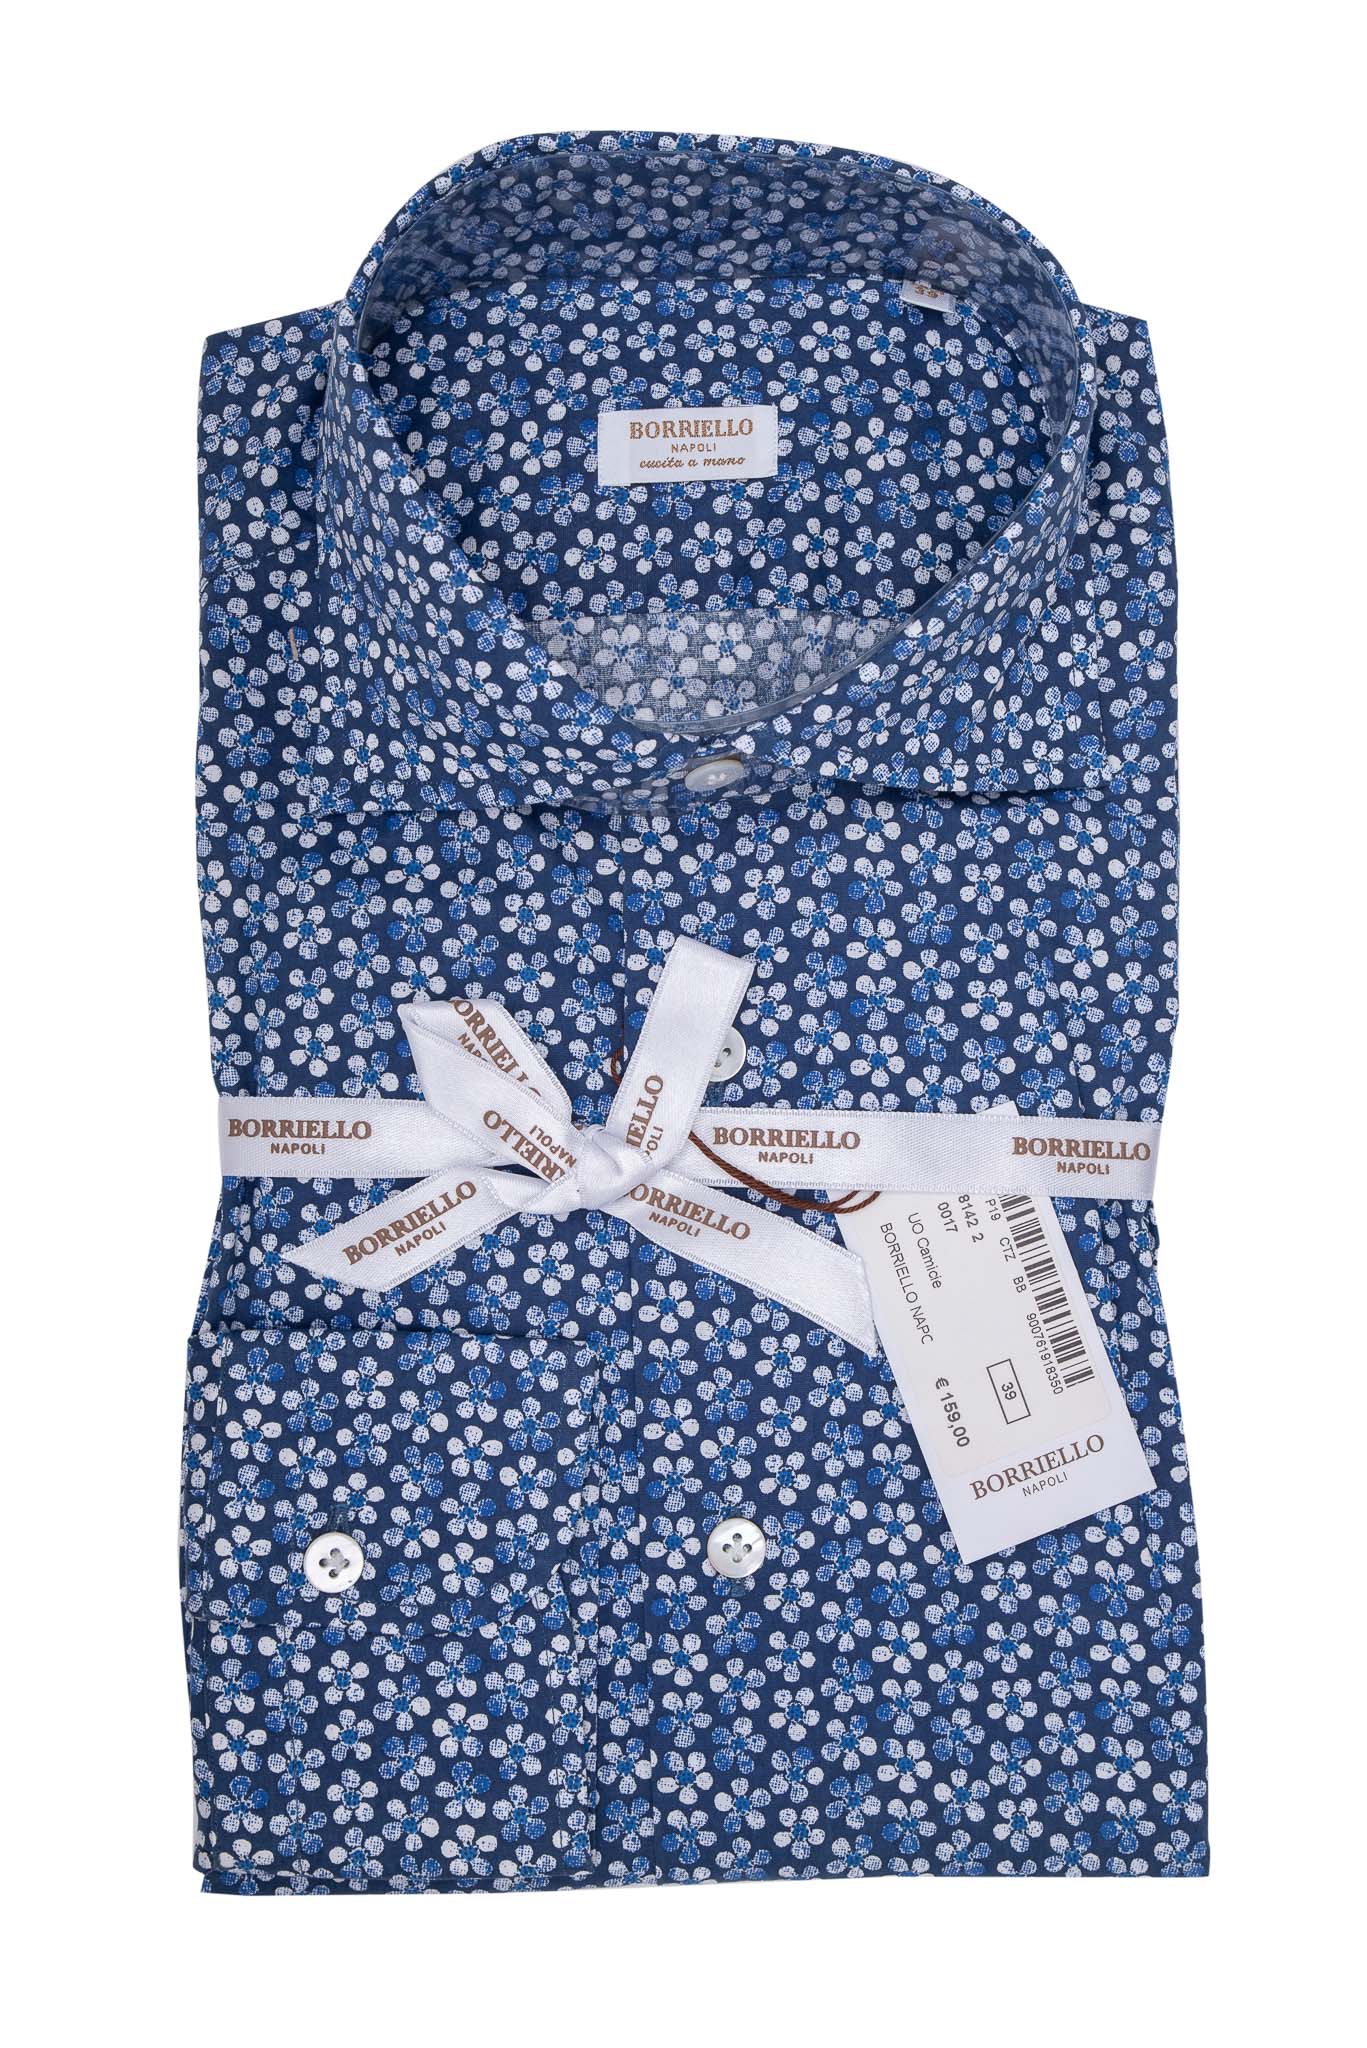 BORRIELLO NAPOLI Blue Cotton Shirt Floral Hand-Sewn in Italy Slim Fit 15  1/2 39